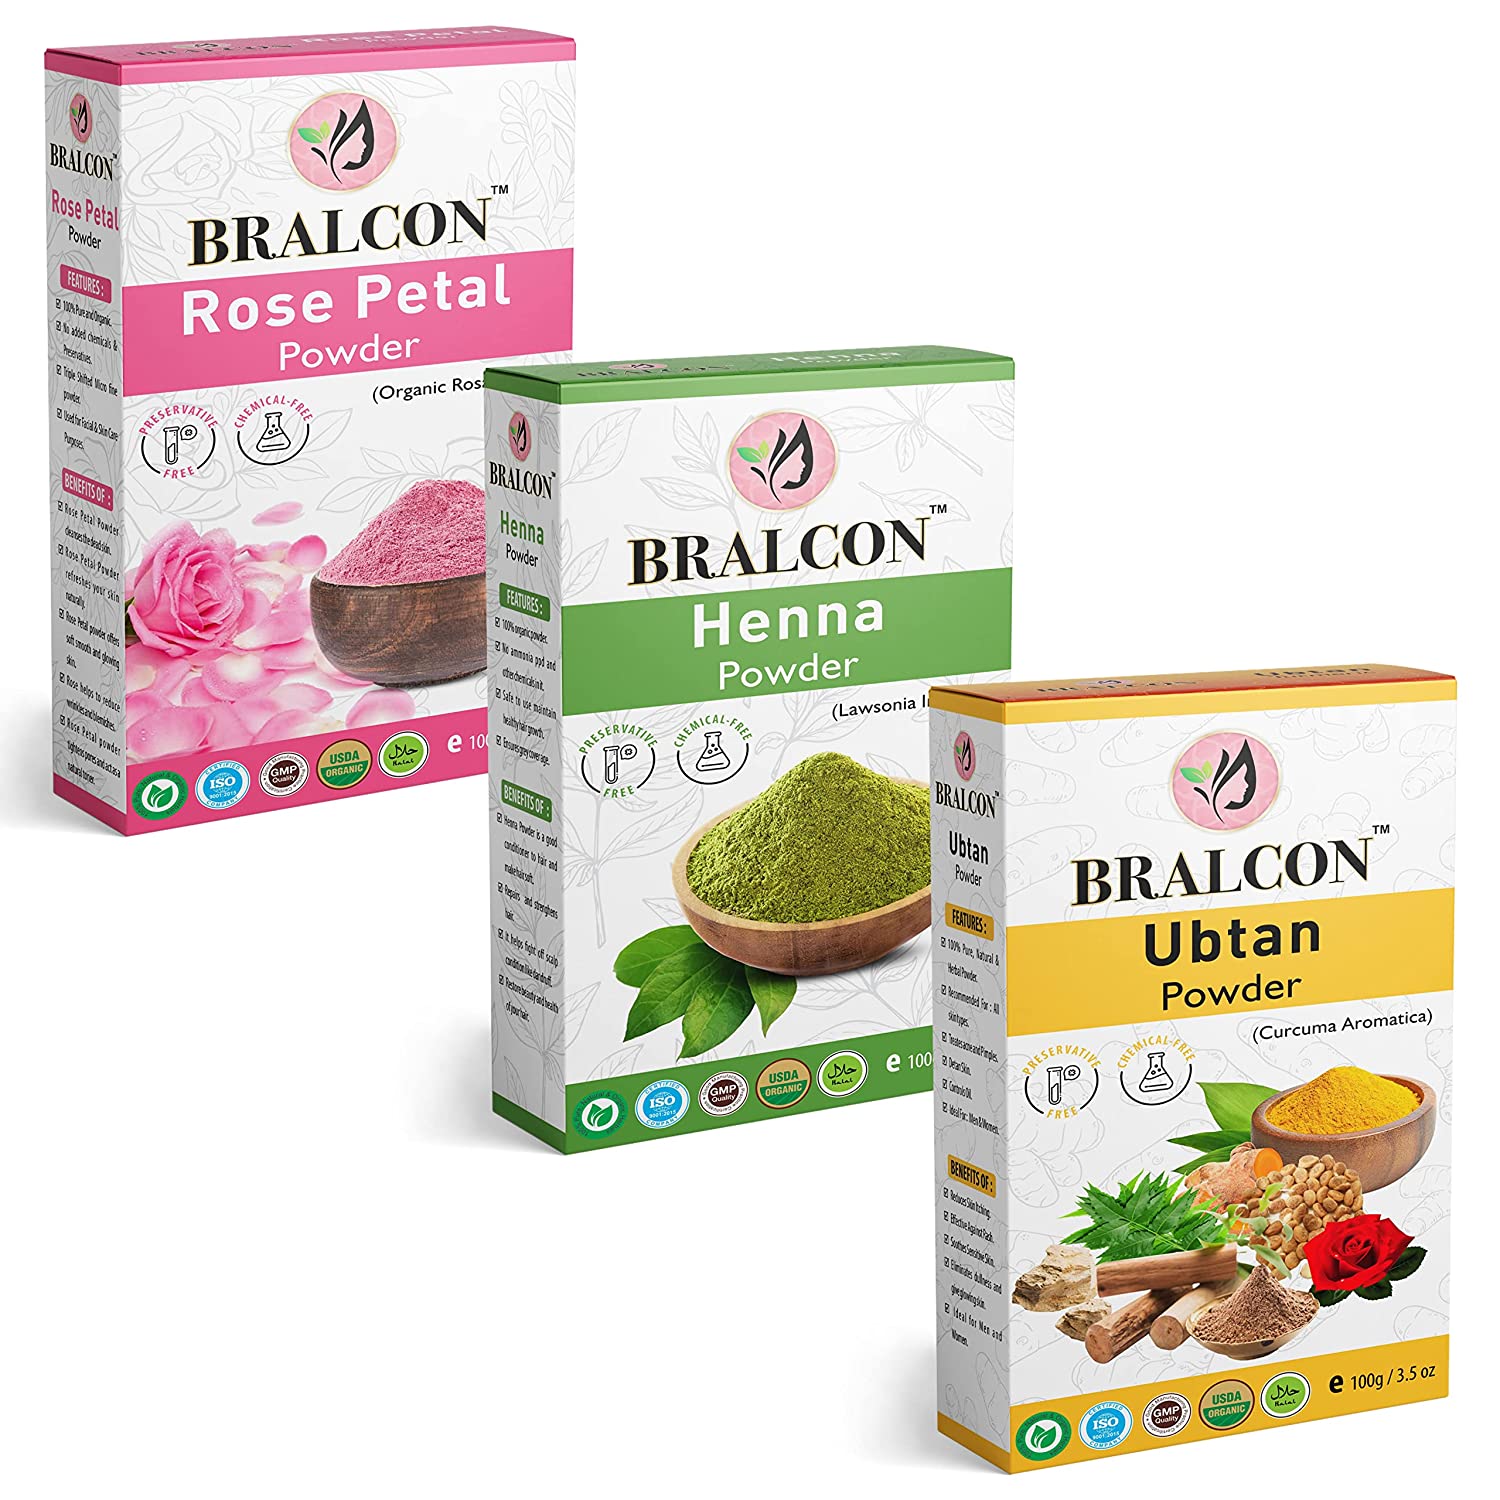 BRALCON Organic Rose Petal Powder, Henna powder, Ubtan Powder  Combo-300g(100g x 3 Pack) - Online Quality Store Official Website